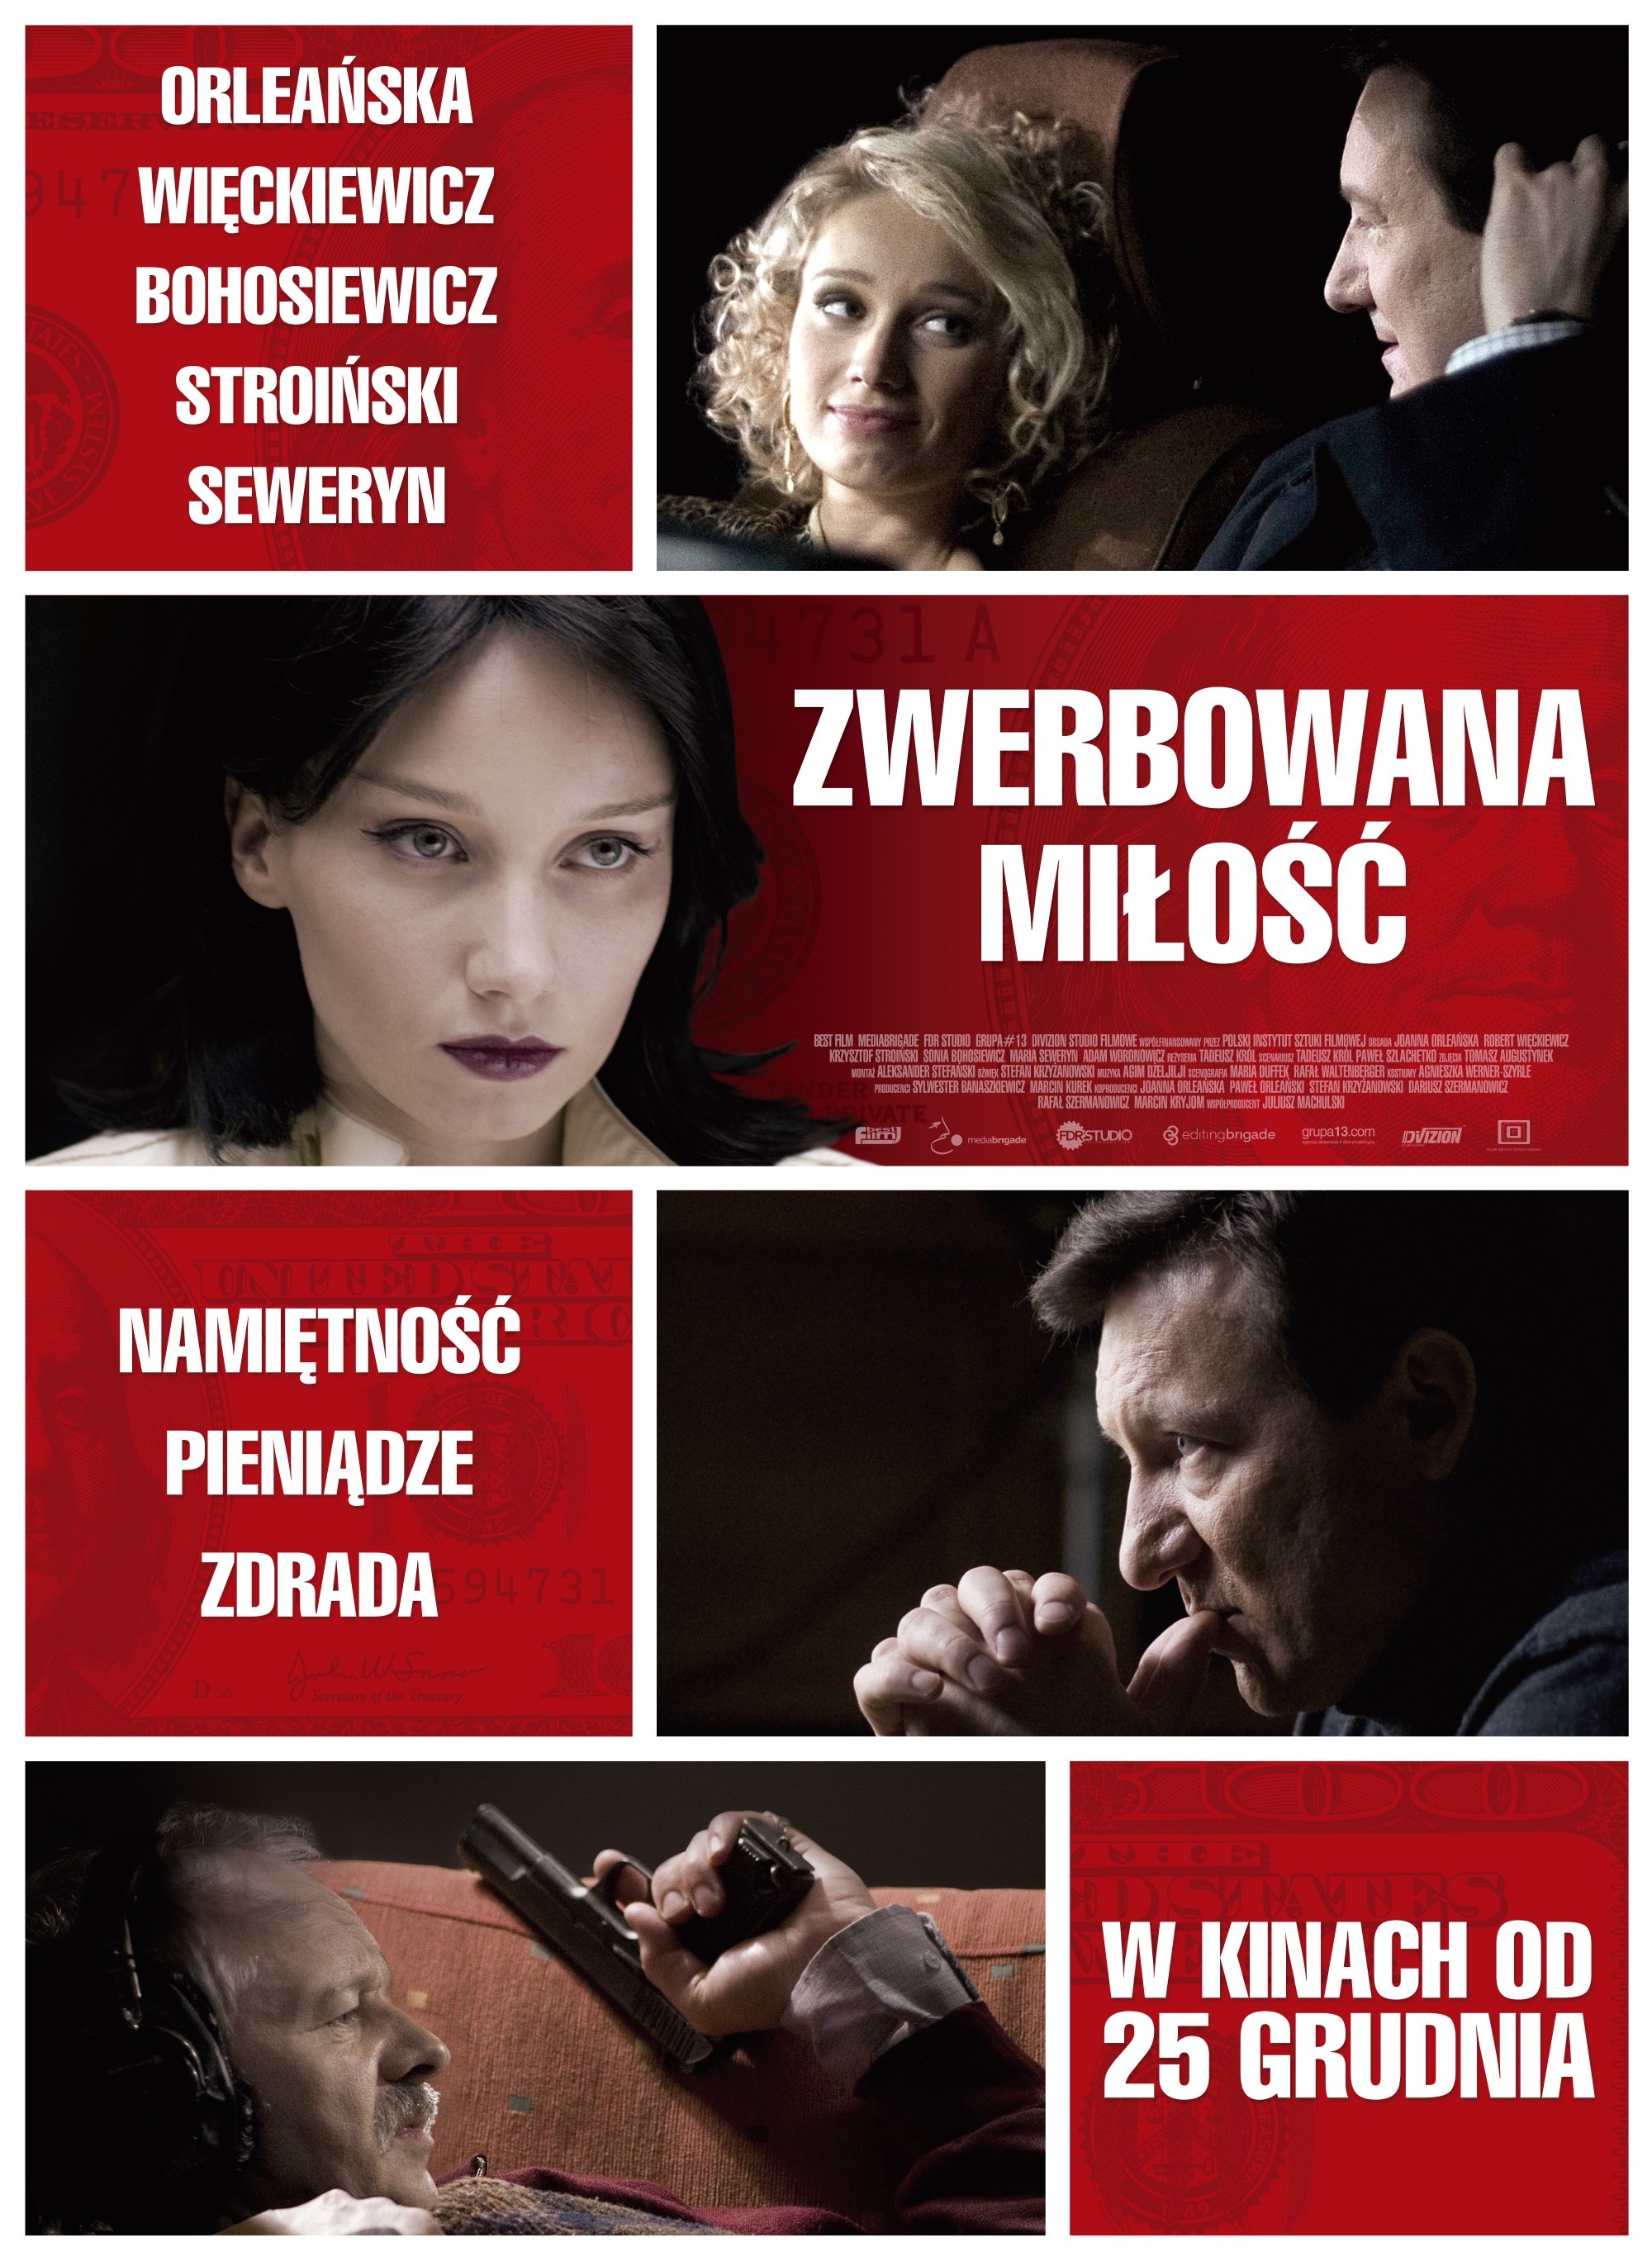 Mega Sized Movie Poster Image for Zwerbowana milosc 